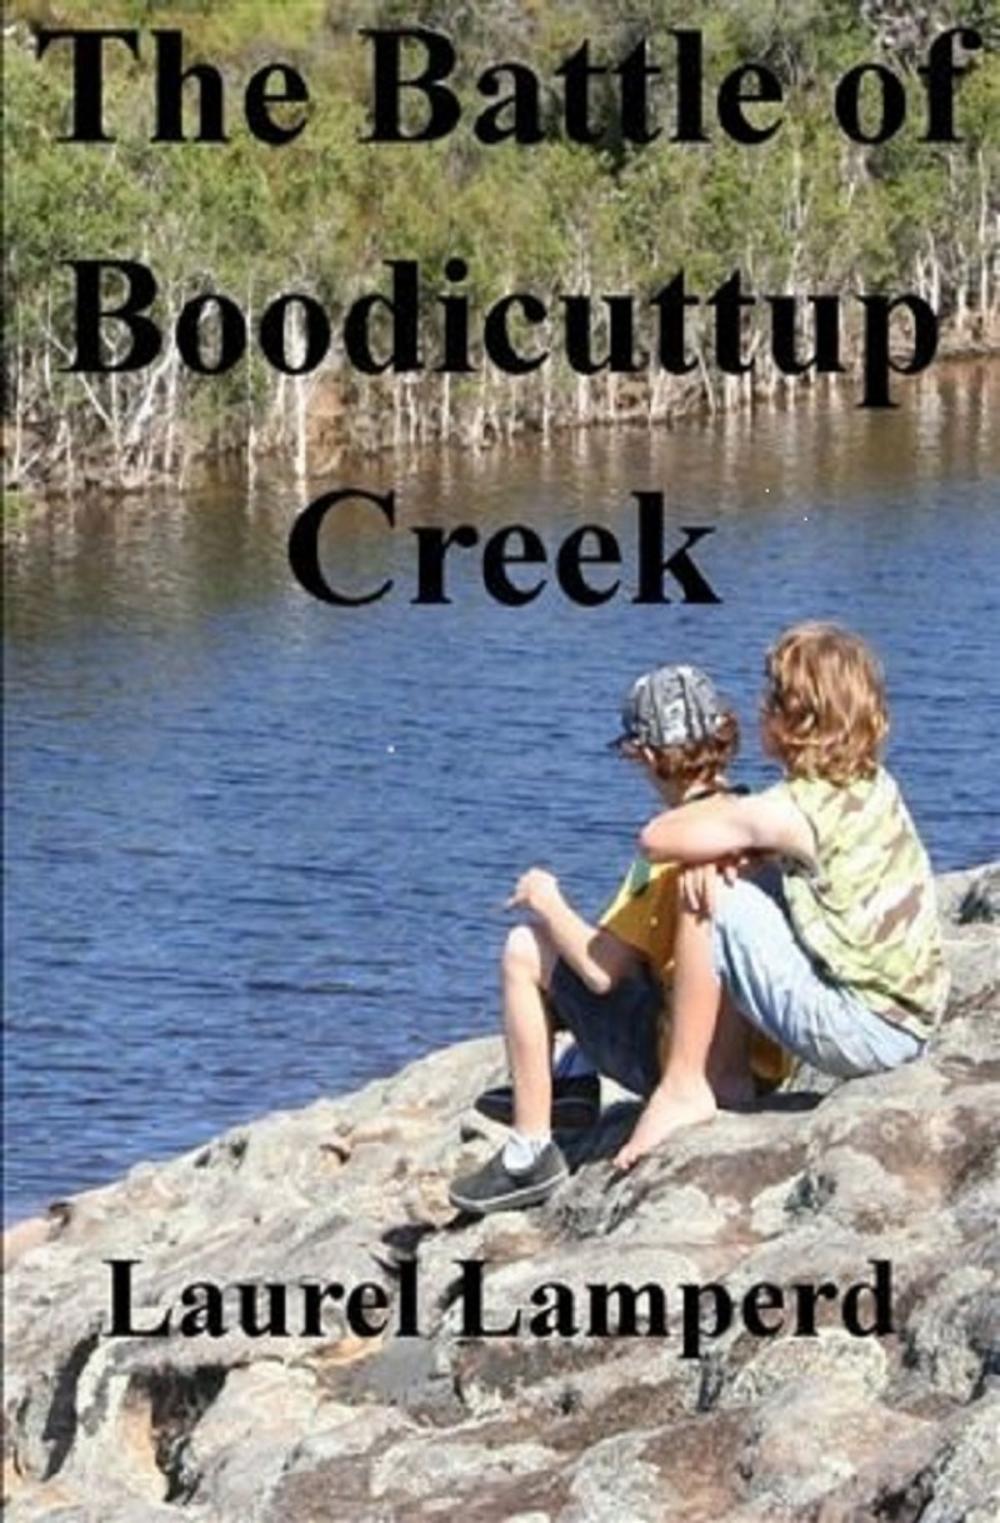 Big bigCover of Battle of Boodicuttup Creek